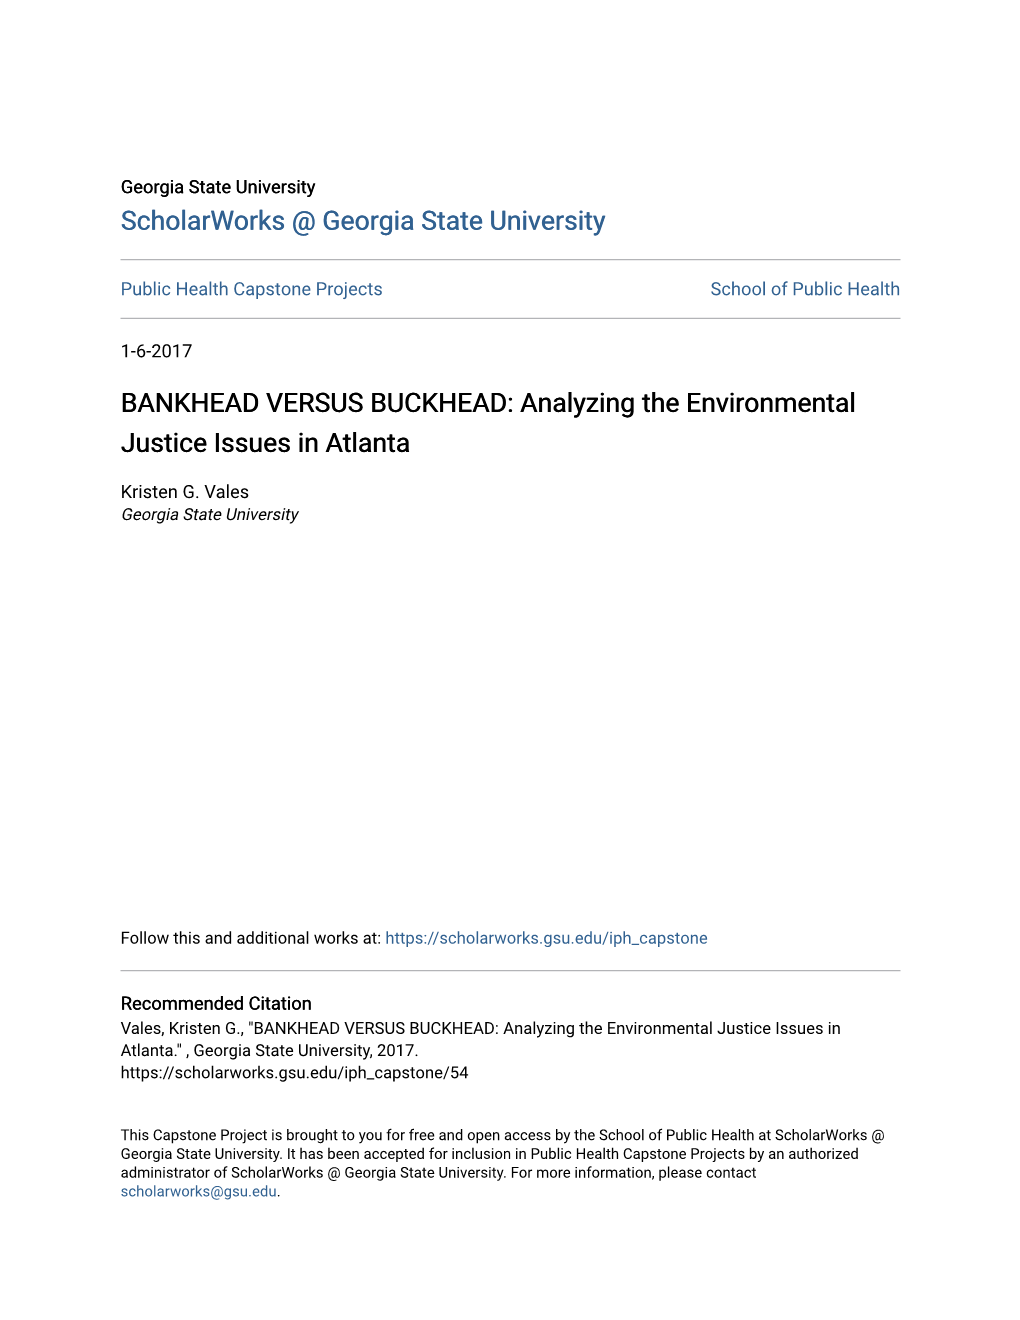 BANKHEAD VERSUS BUCKHEAD: Analyzing the Environmental Justice Issues in Atlanta